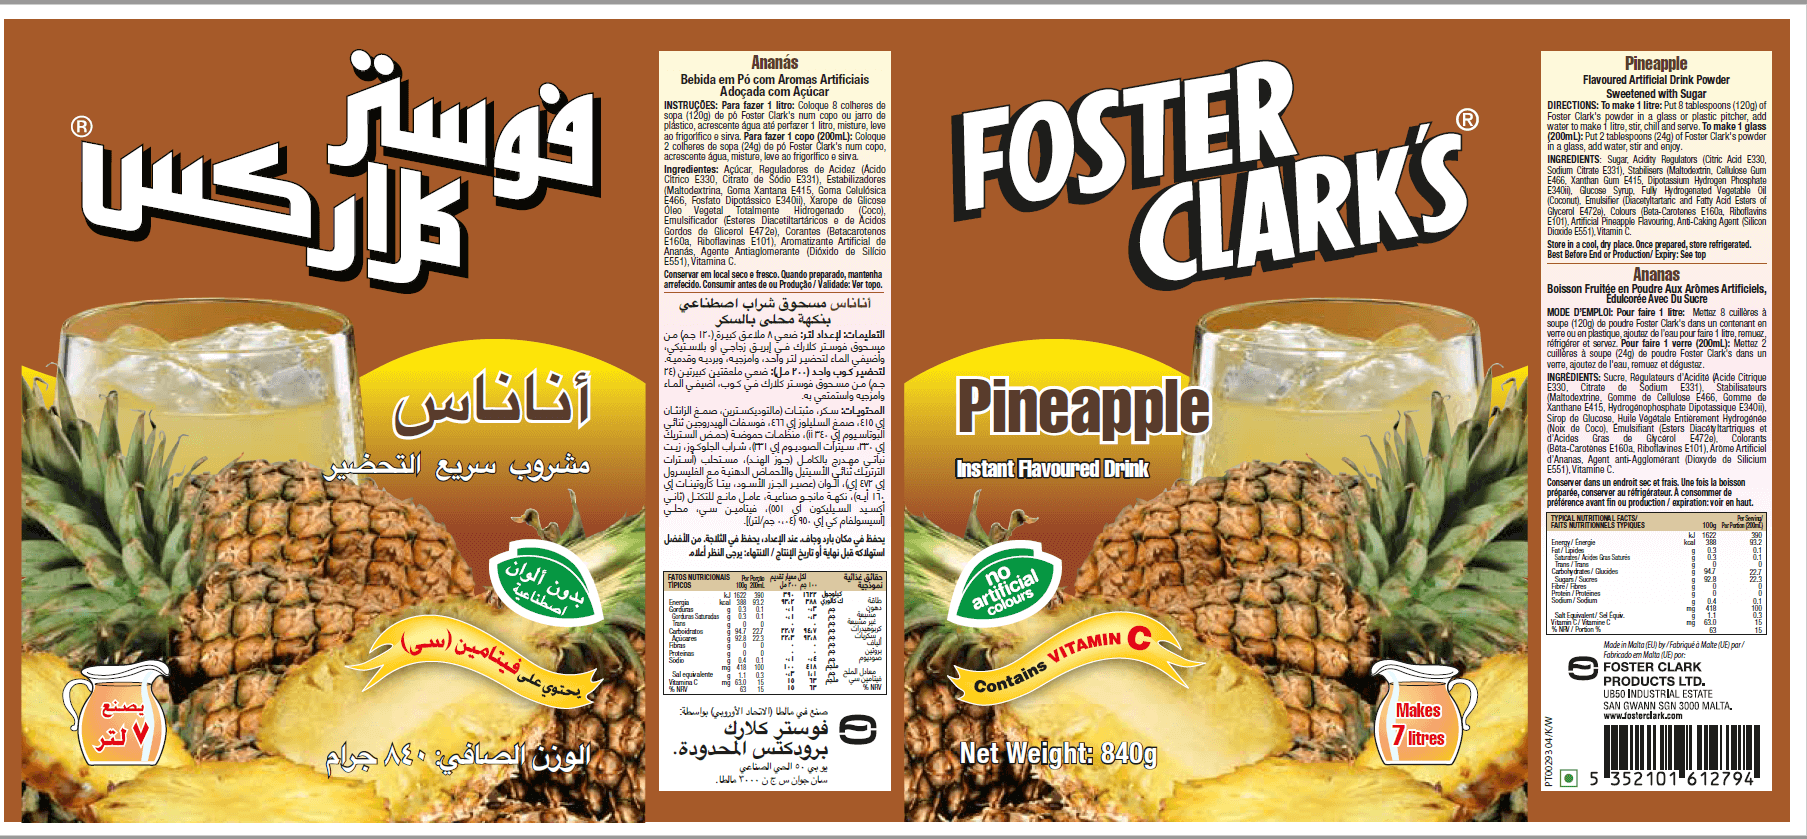 Foster Clark's Pineapple Juice